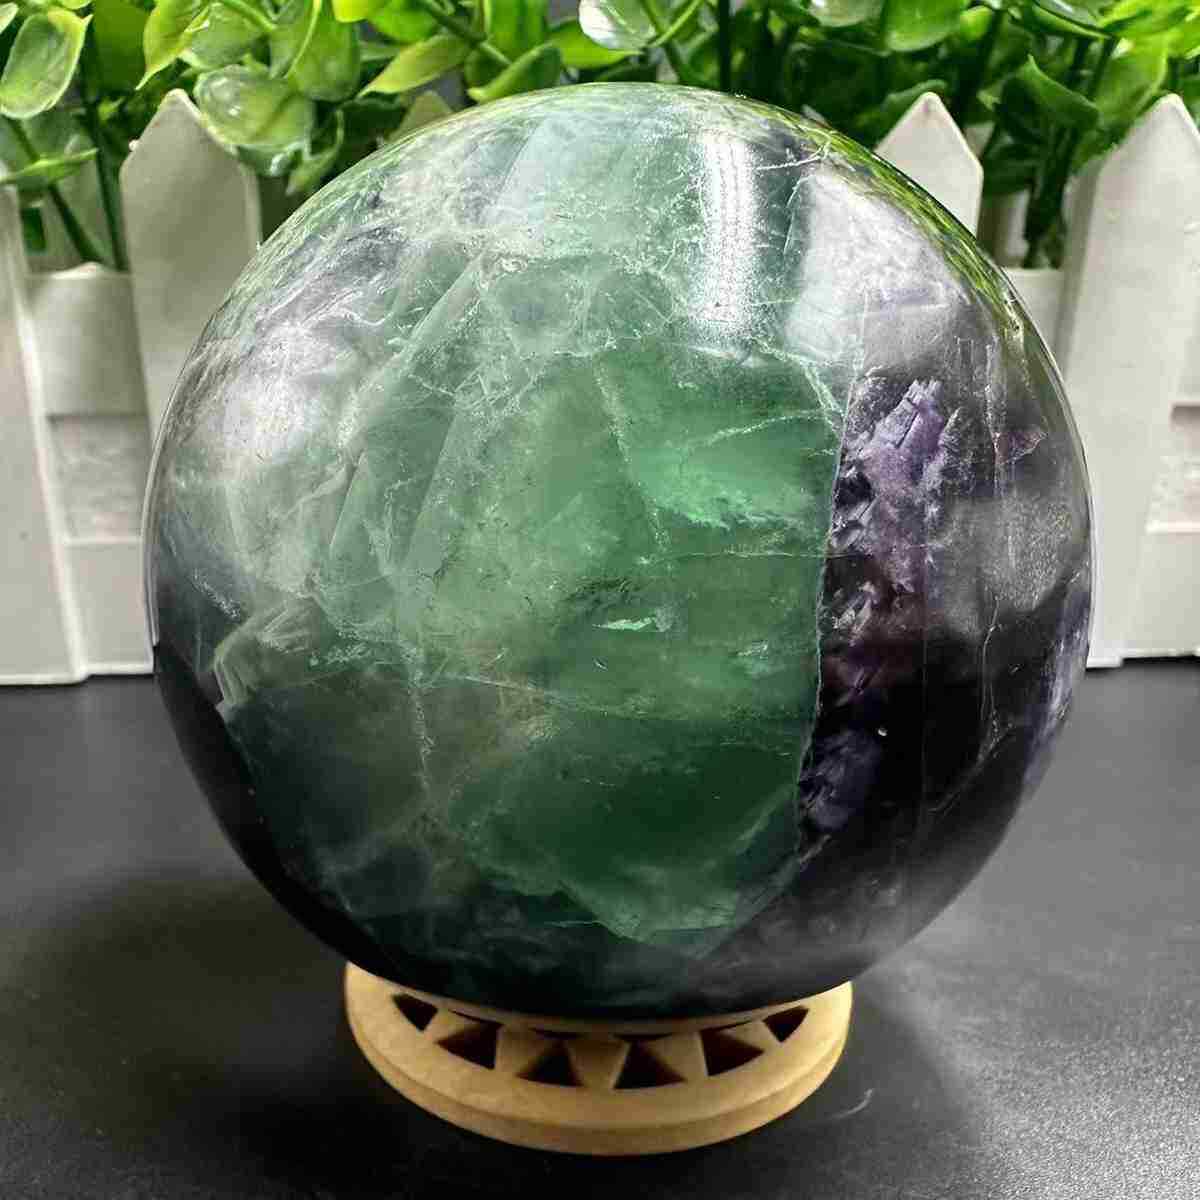 775g Natural Fluorite Quartz Sphere Crystal Energy Ball Reiki Healing Gem